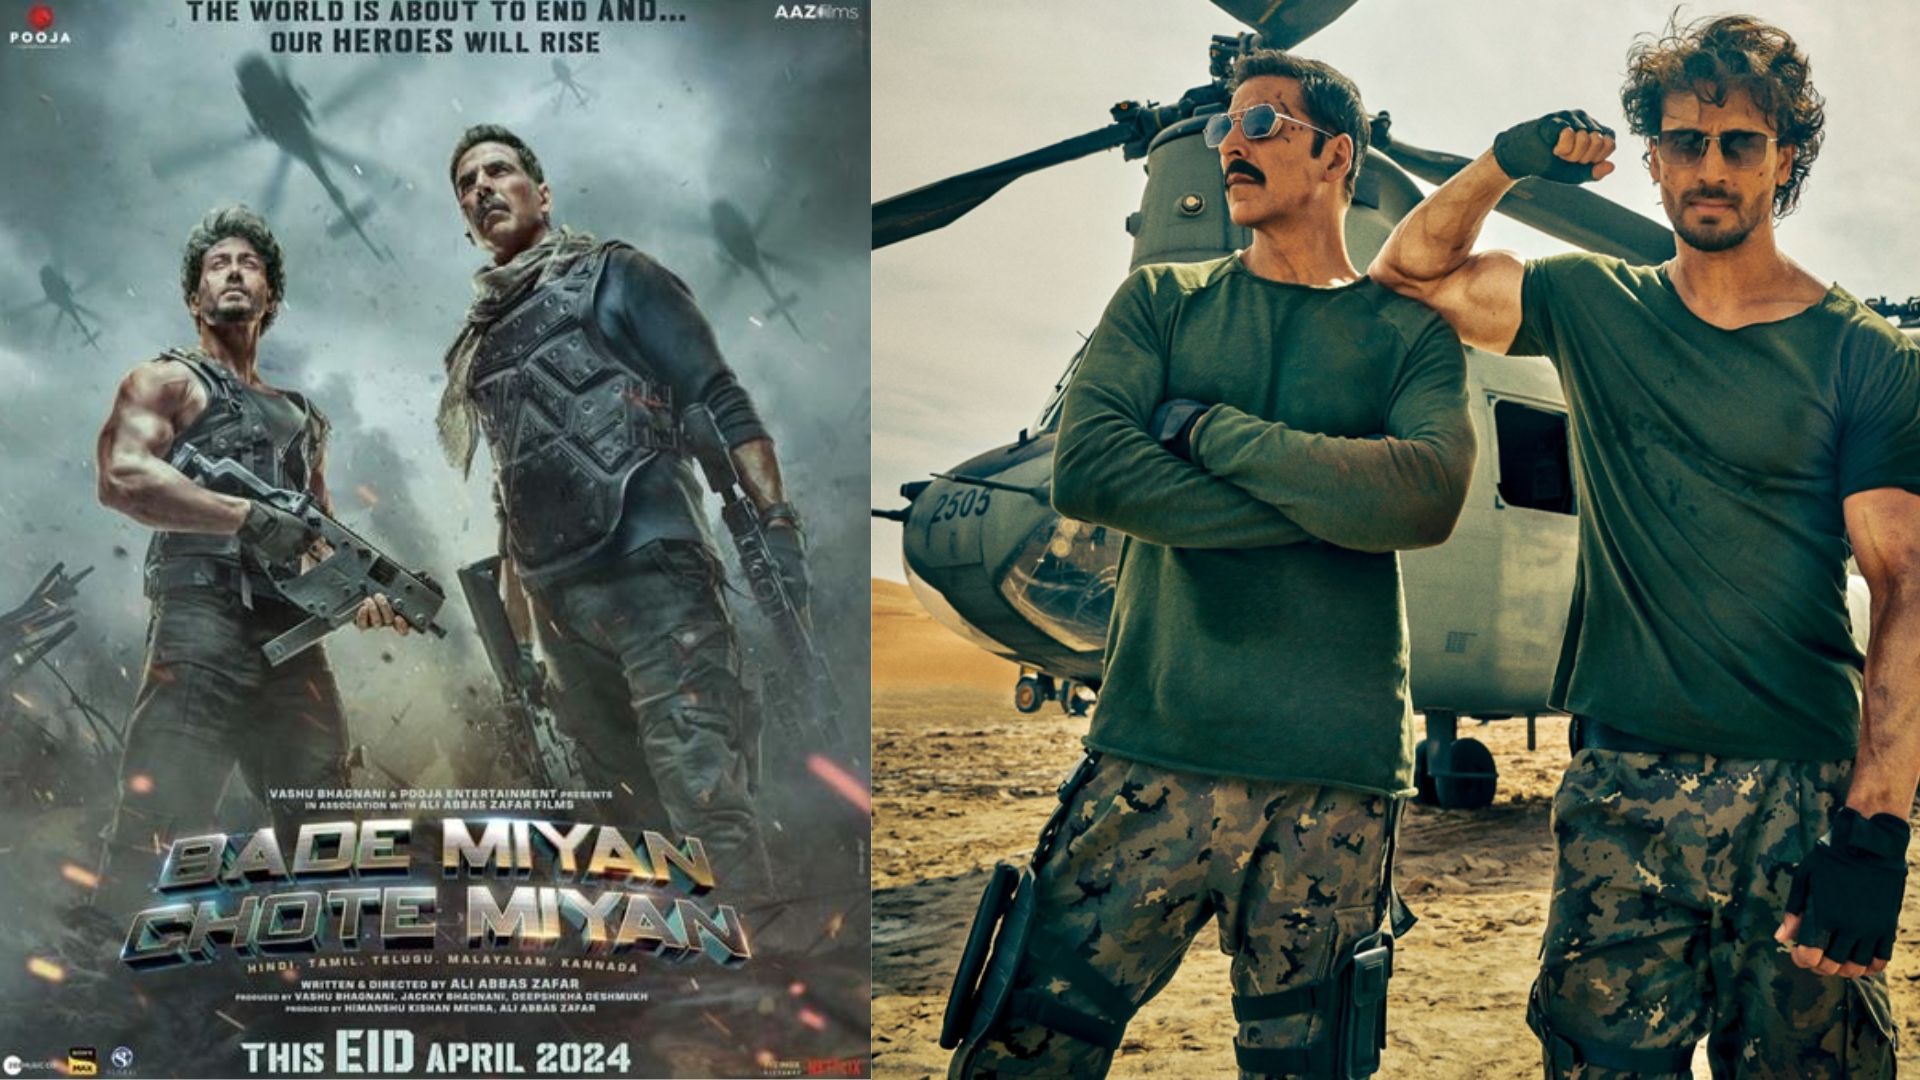 Bade Miyan Chote Miyan teaser: Akshay Kumar and Tiger Shroff Promise a Thrilling Action Spectacle